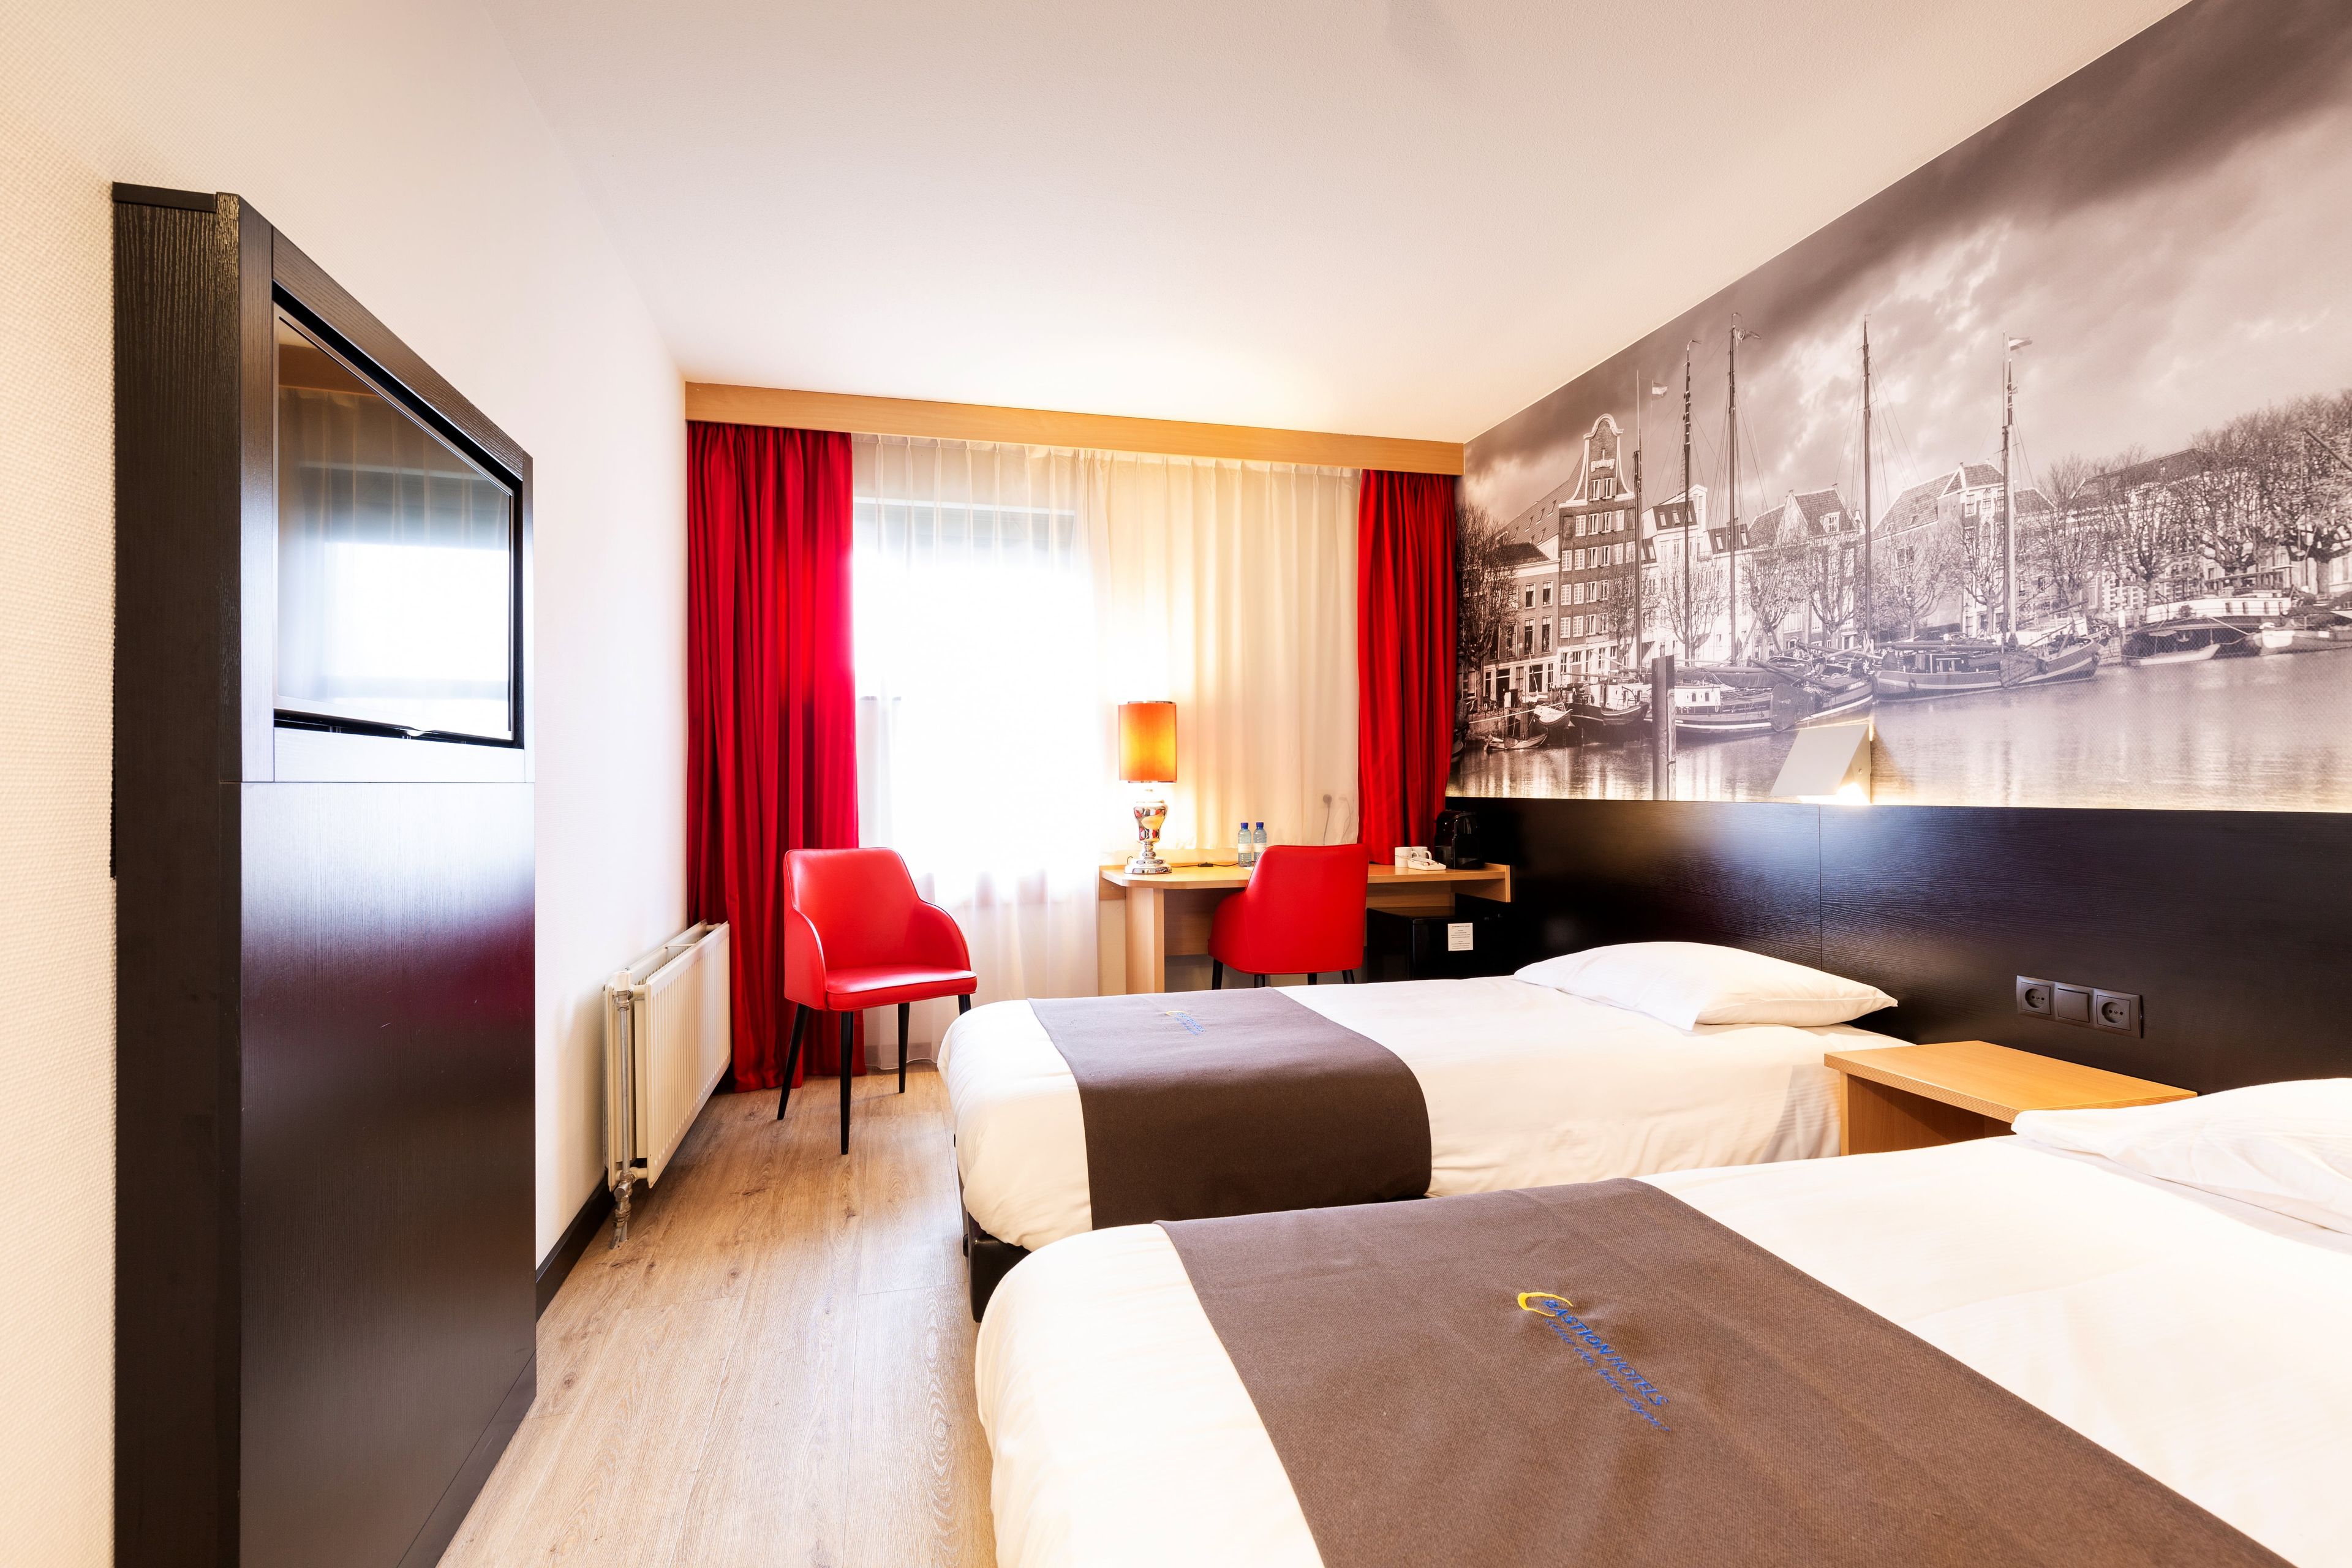 Bastion Hotel Dordrecht Papendrecht <br/>64.00 ew <br/> <a href='http://vakantieoplossing.nl/outpage/?id=68a20d423747d5815bcbee7335419305' target='_blank'>View Details</a>